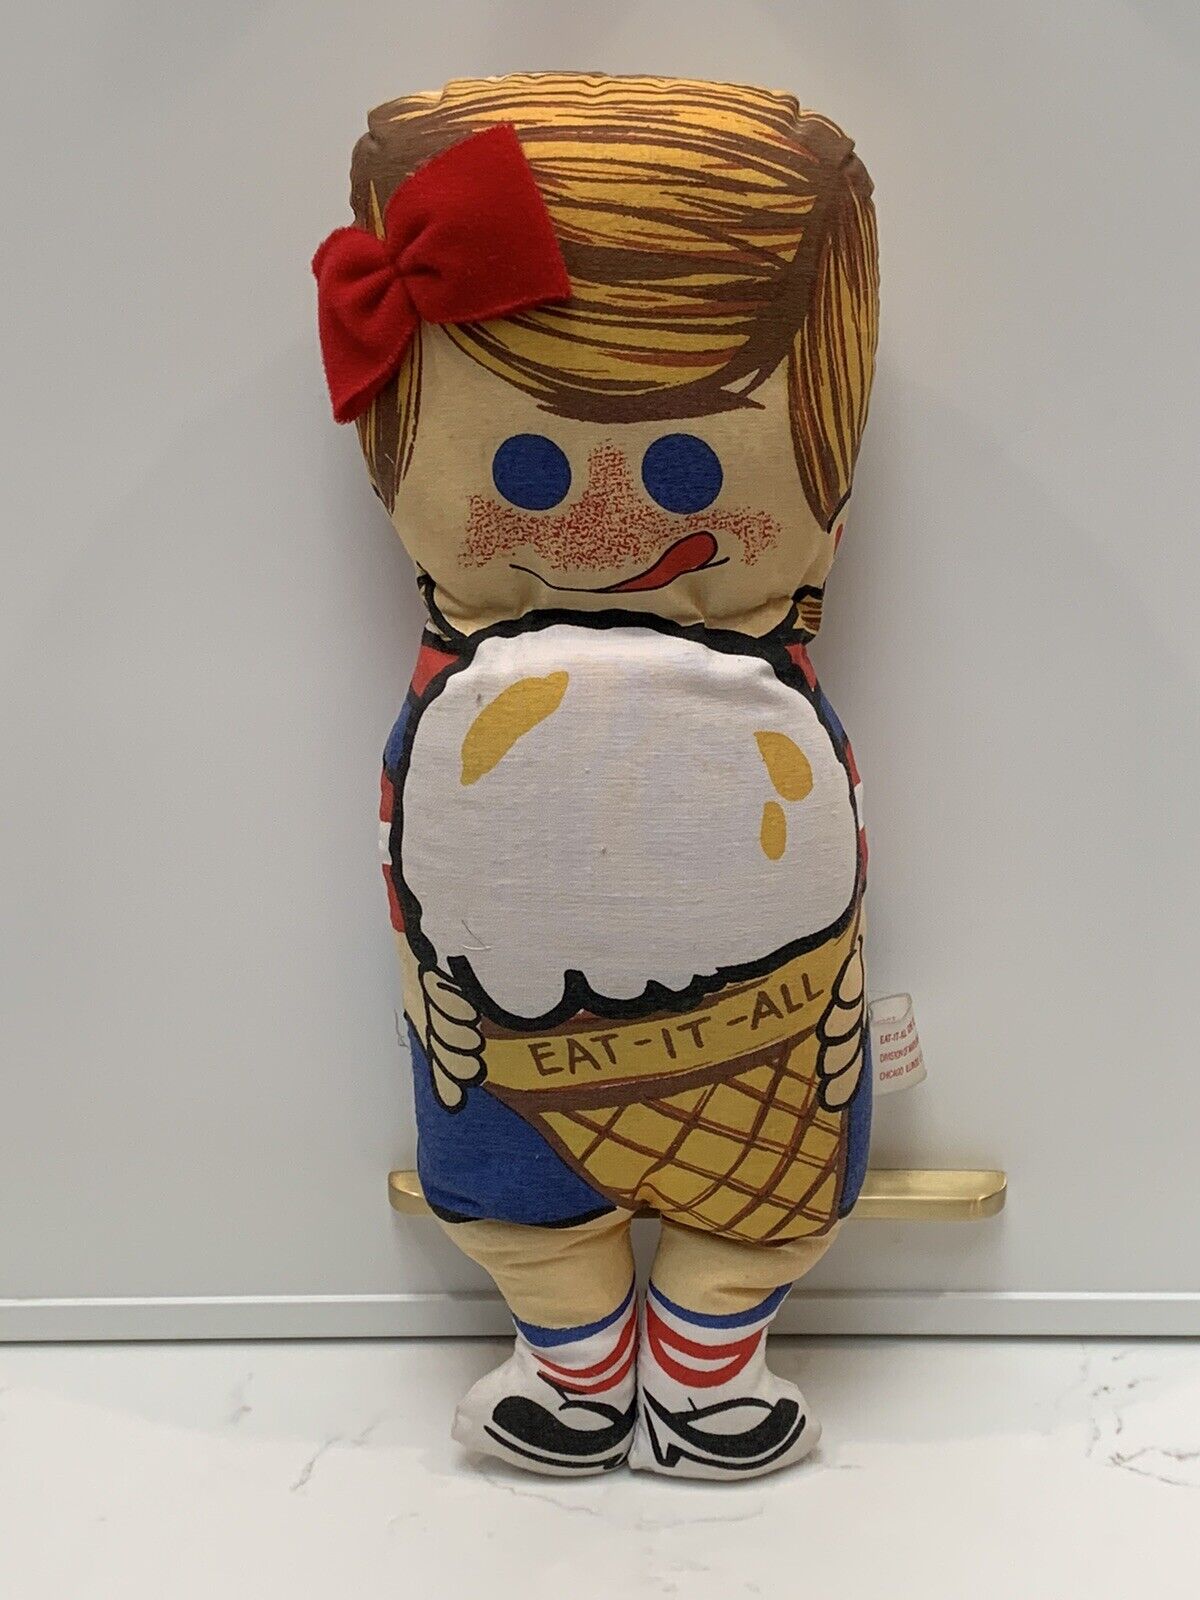 Vintage Eat-It-All Cone Advertising Plush Stuffed Doll 14” Ice Cream Promo